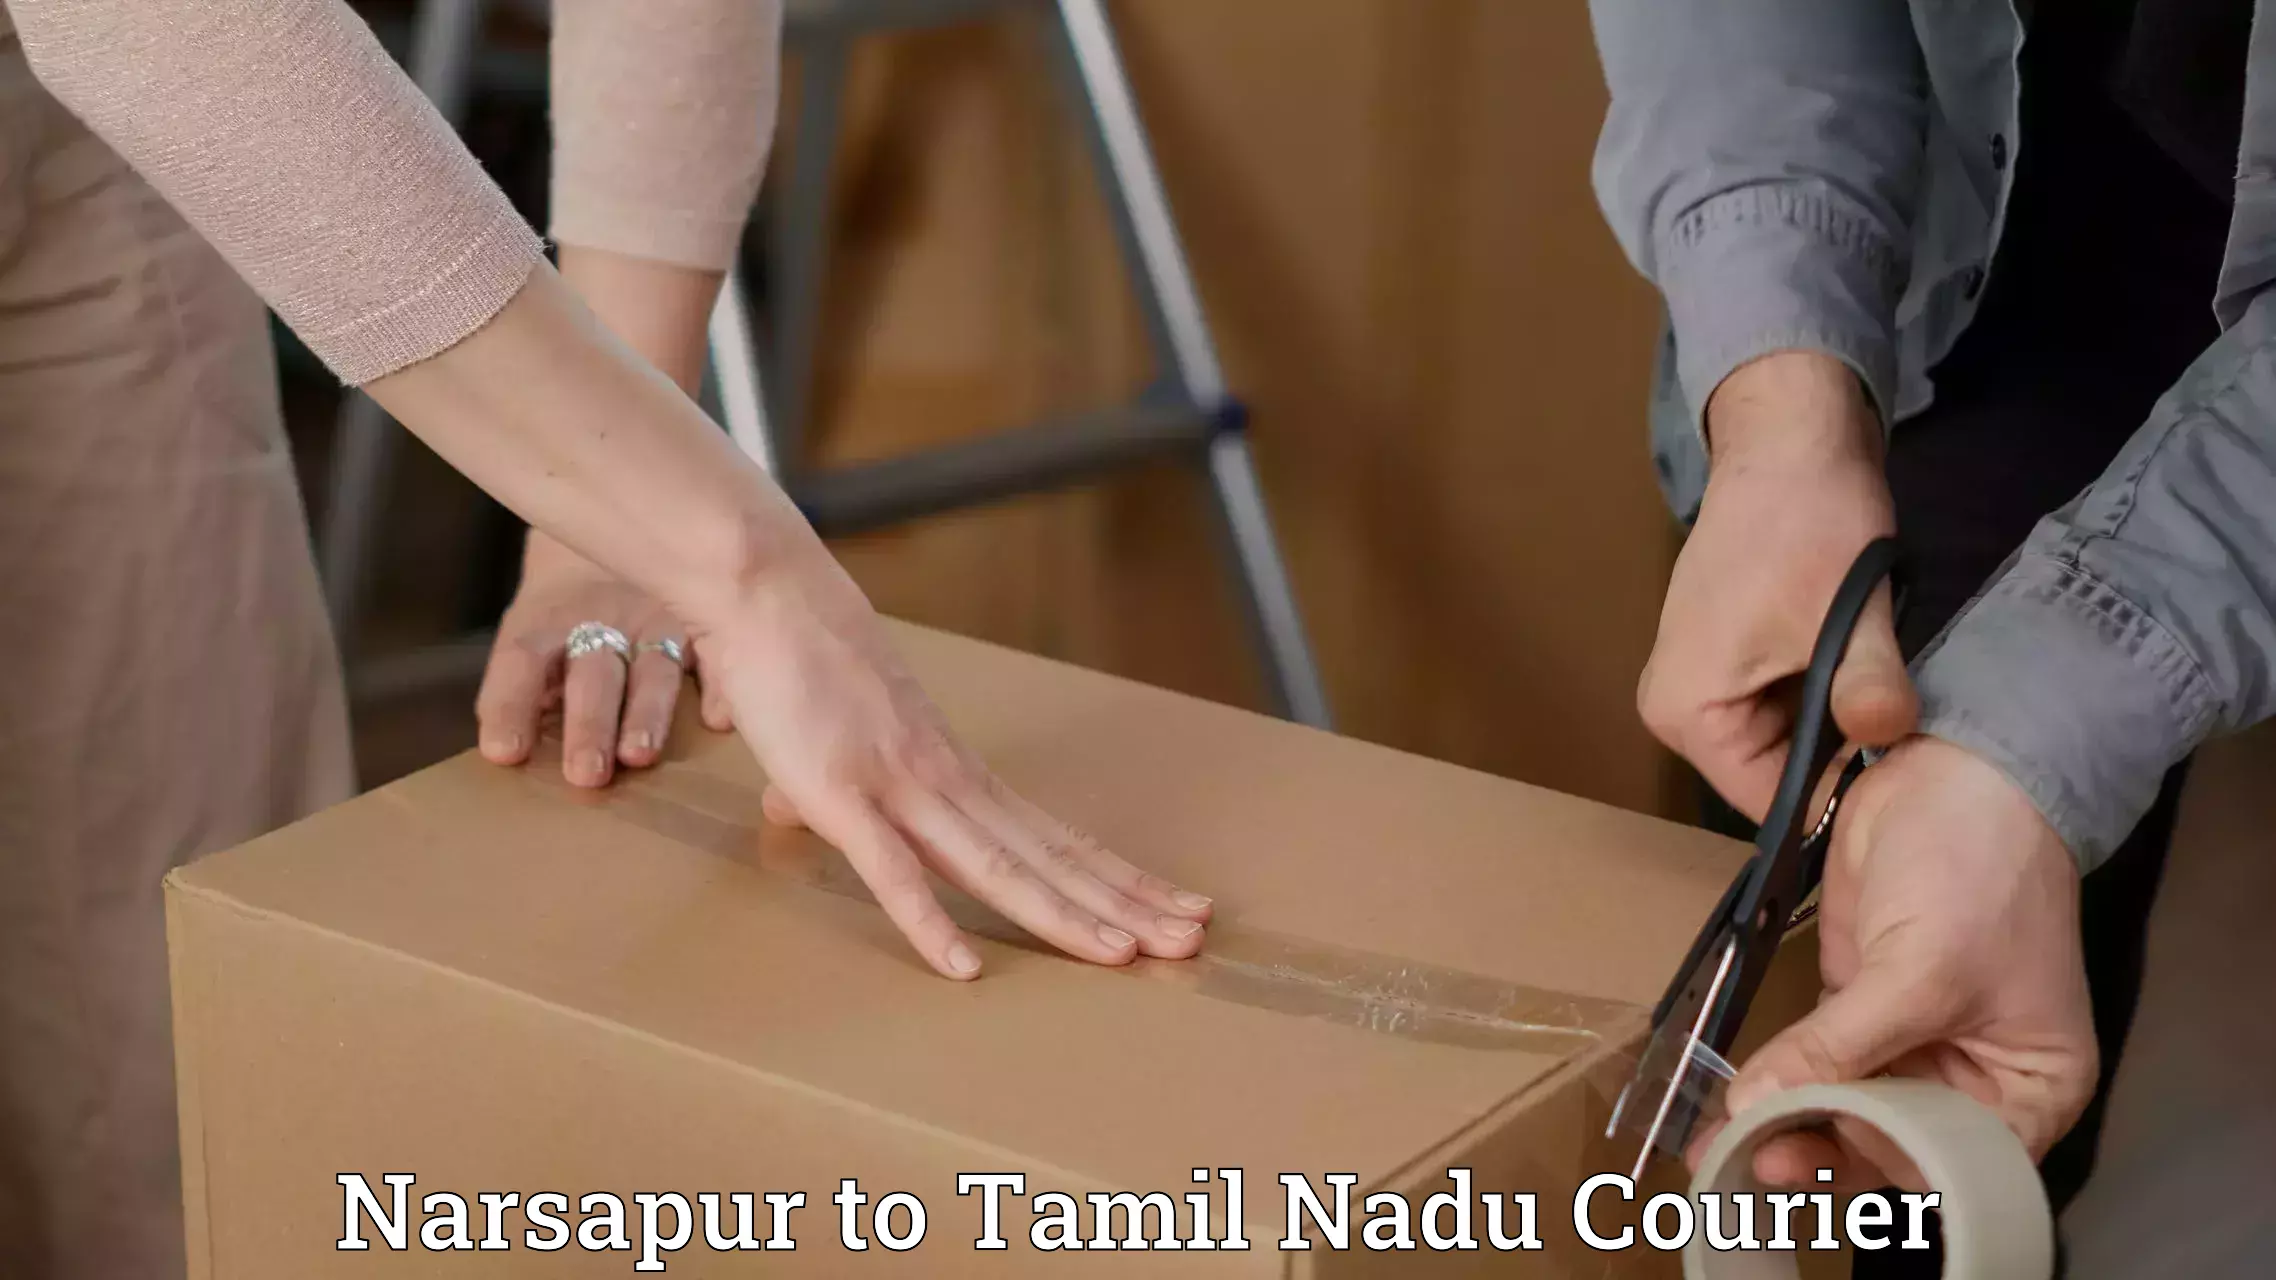 User-friendly delivery service Narsapur to Tamil Nadu